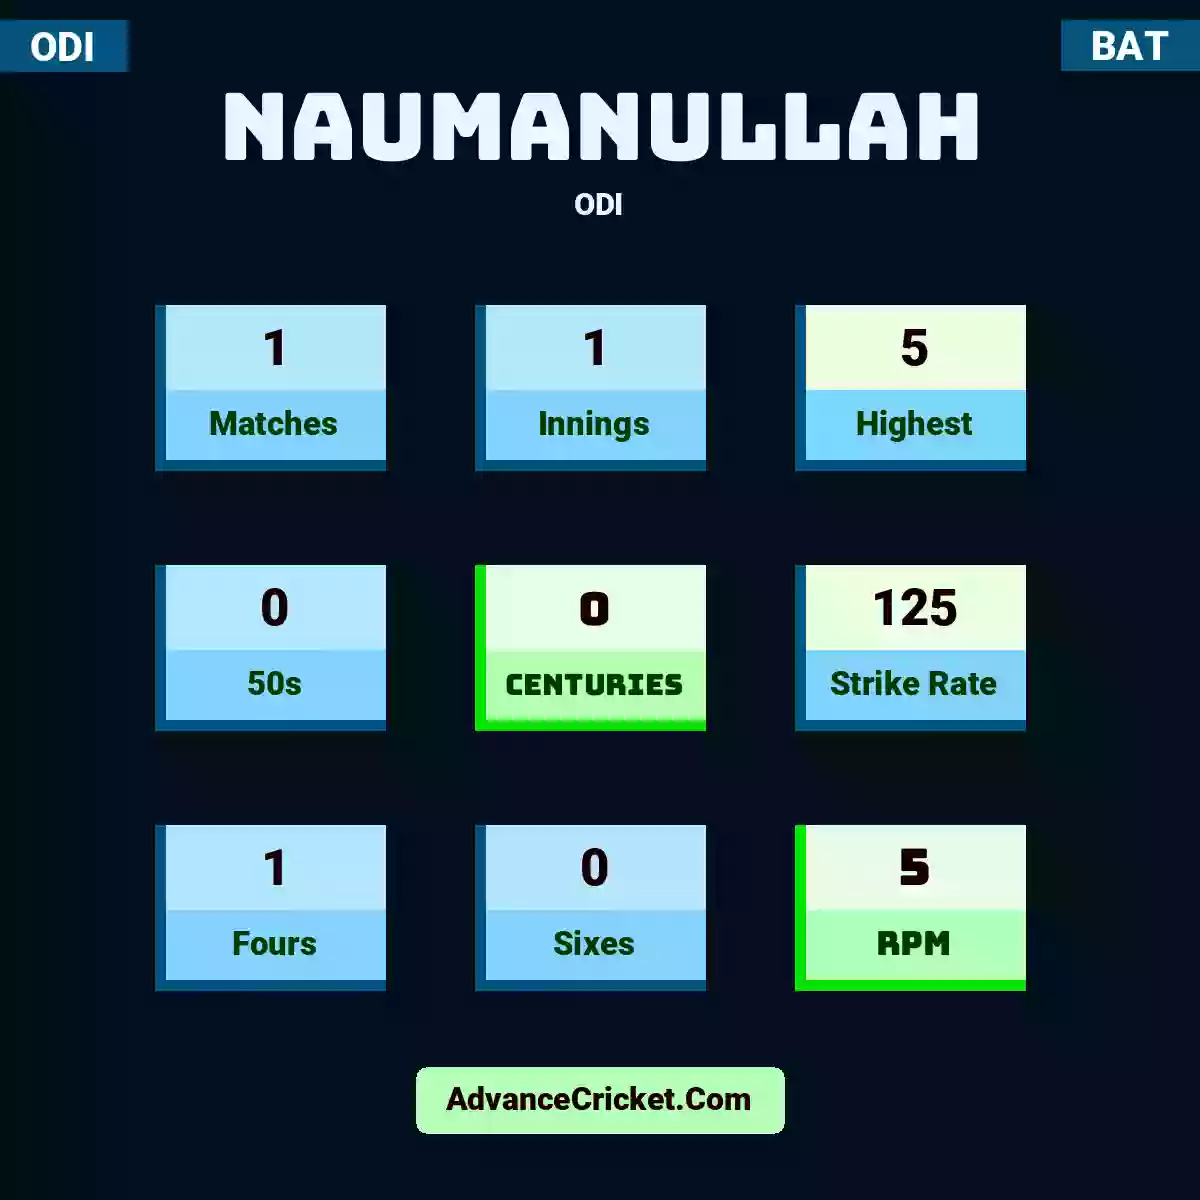 Naumanullah ODI , Naumanullah played 1 matches, scored 5 runs as highest, 0 half-centuries, and 0 centuries, with a strike rate of 125. N.Naumanullah hit 1 fours and 0 sixes, with an RPM of 5.